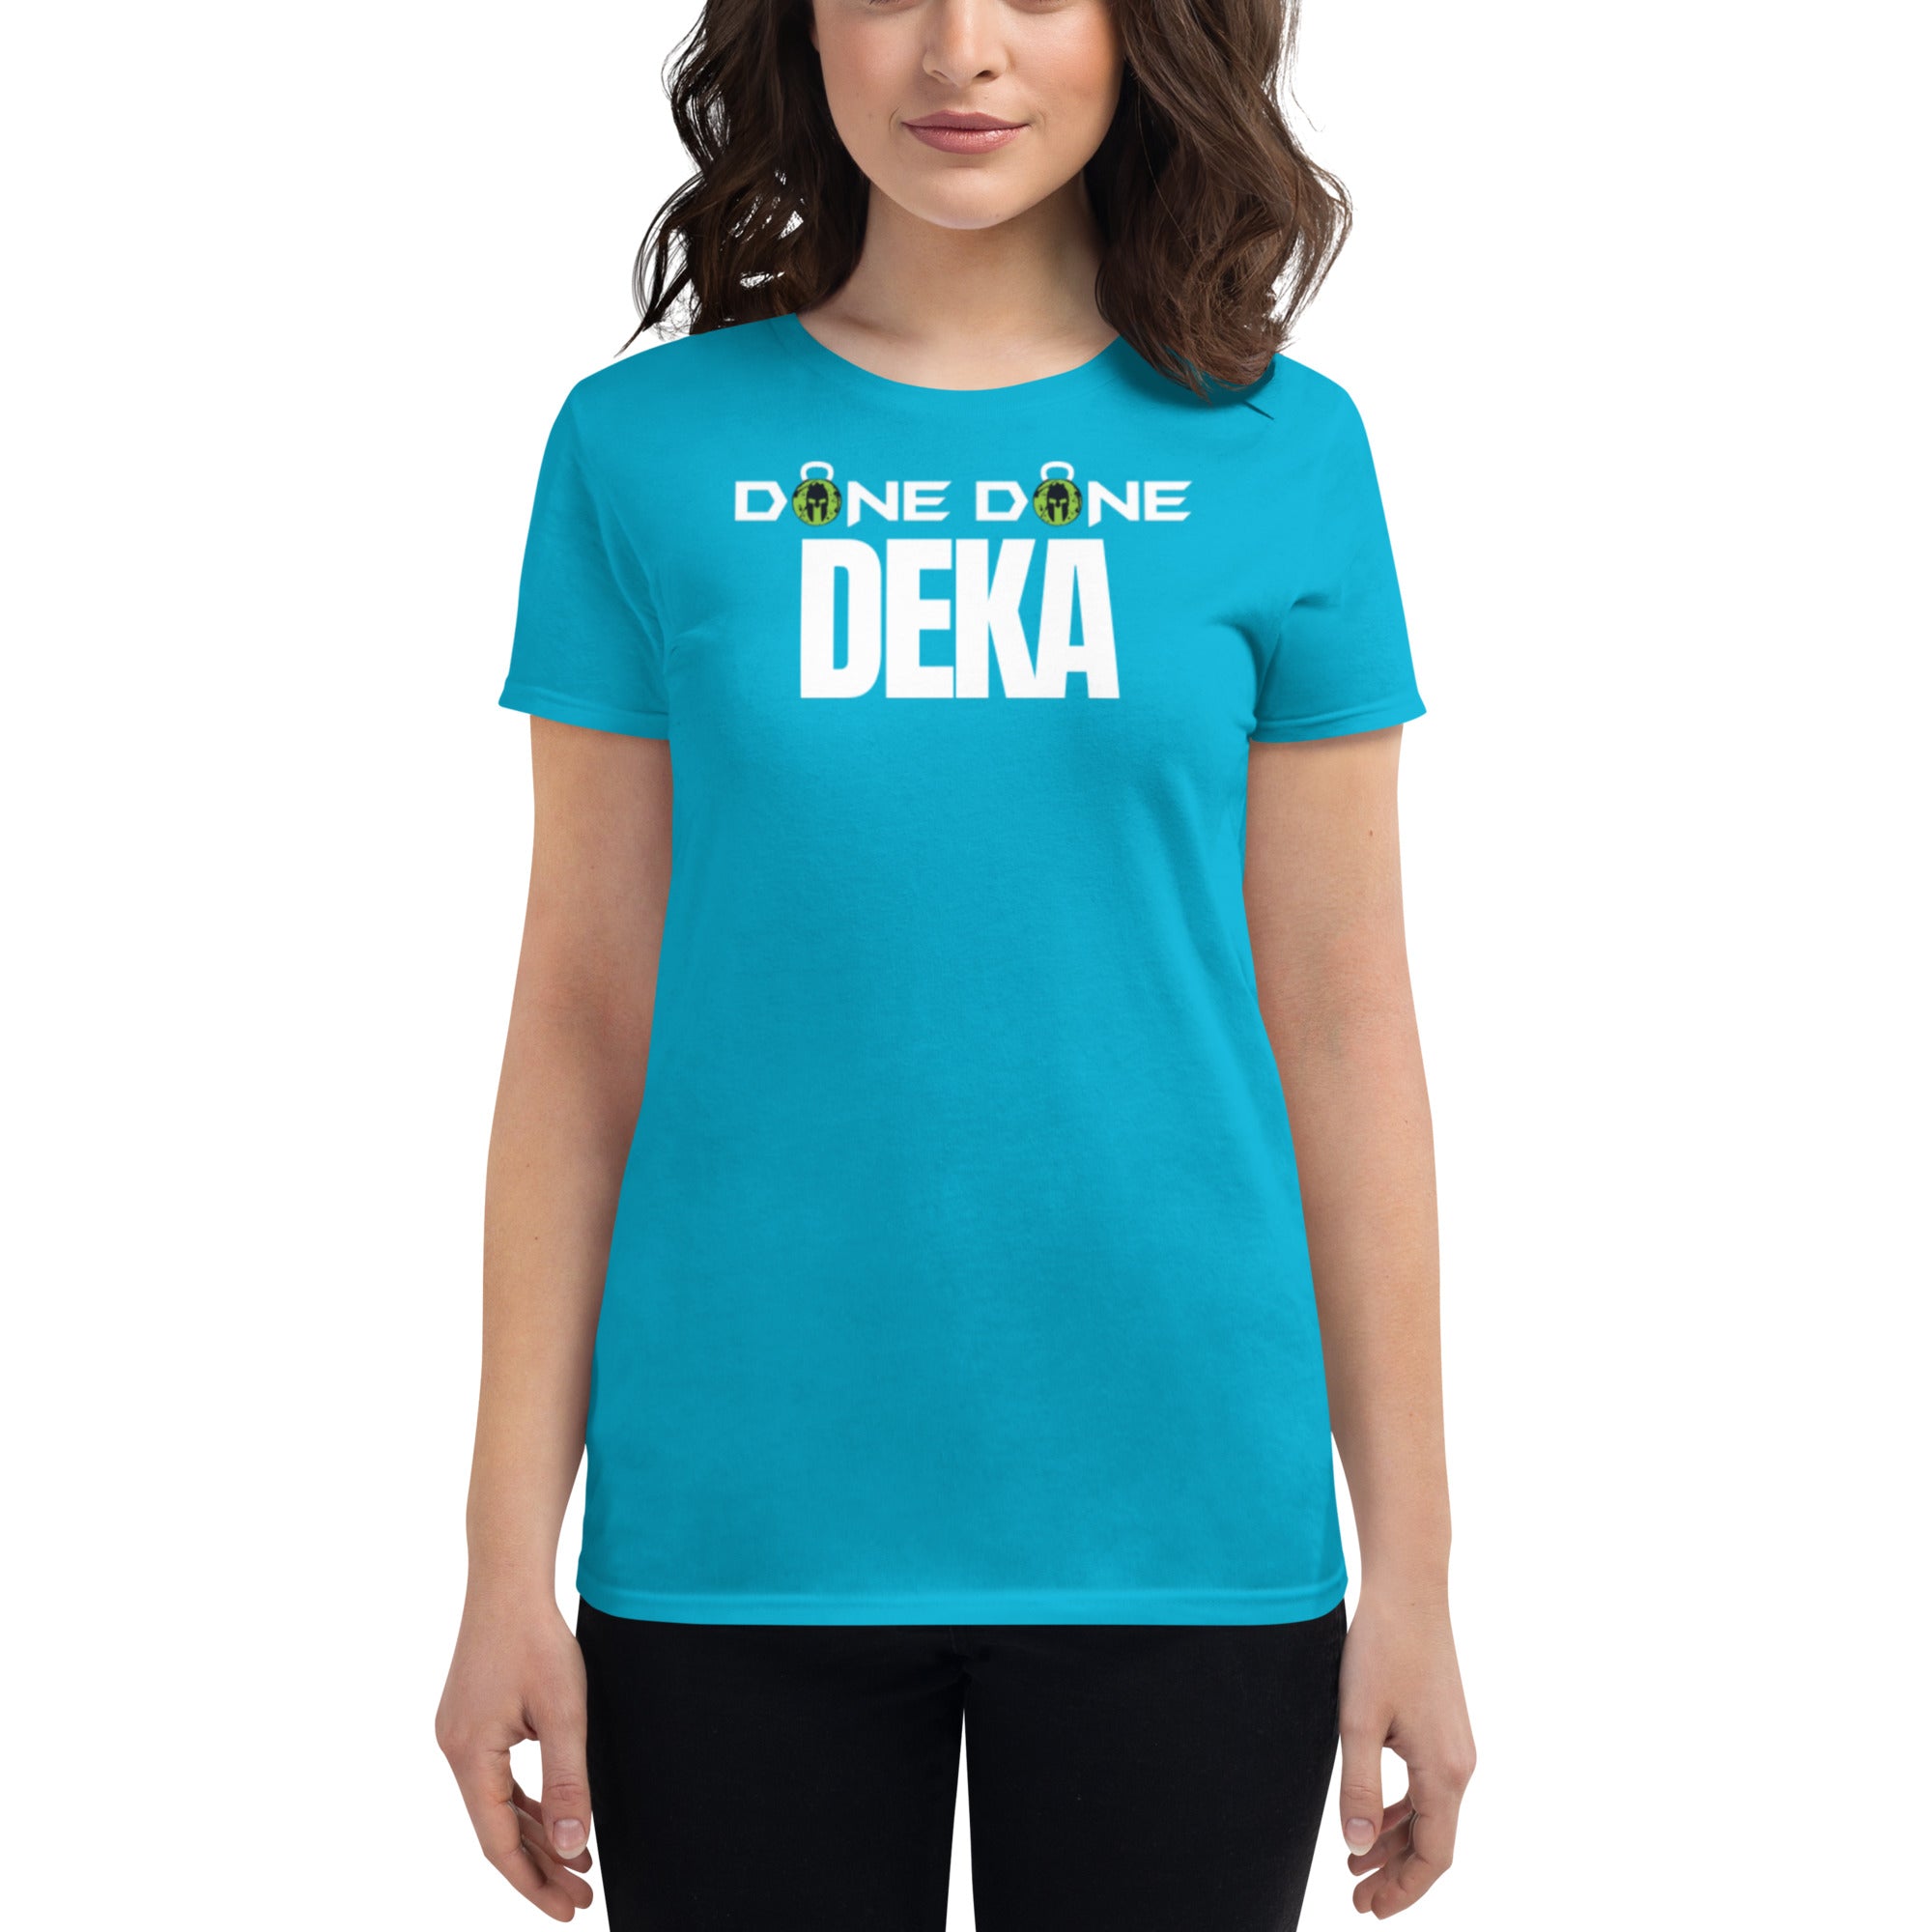 Women's DEKA MurderBIKE short sleeve t-shirt